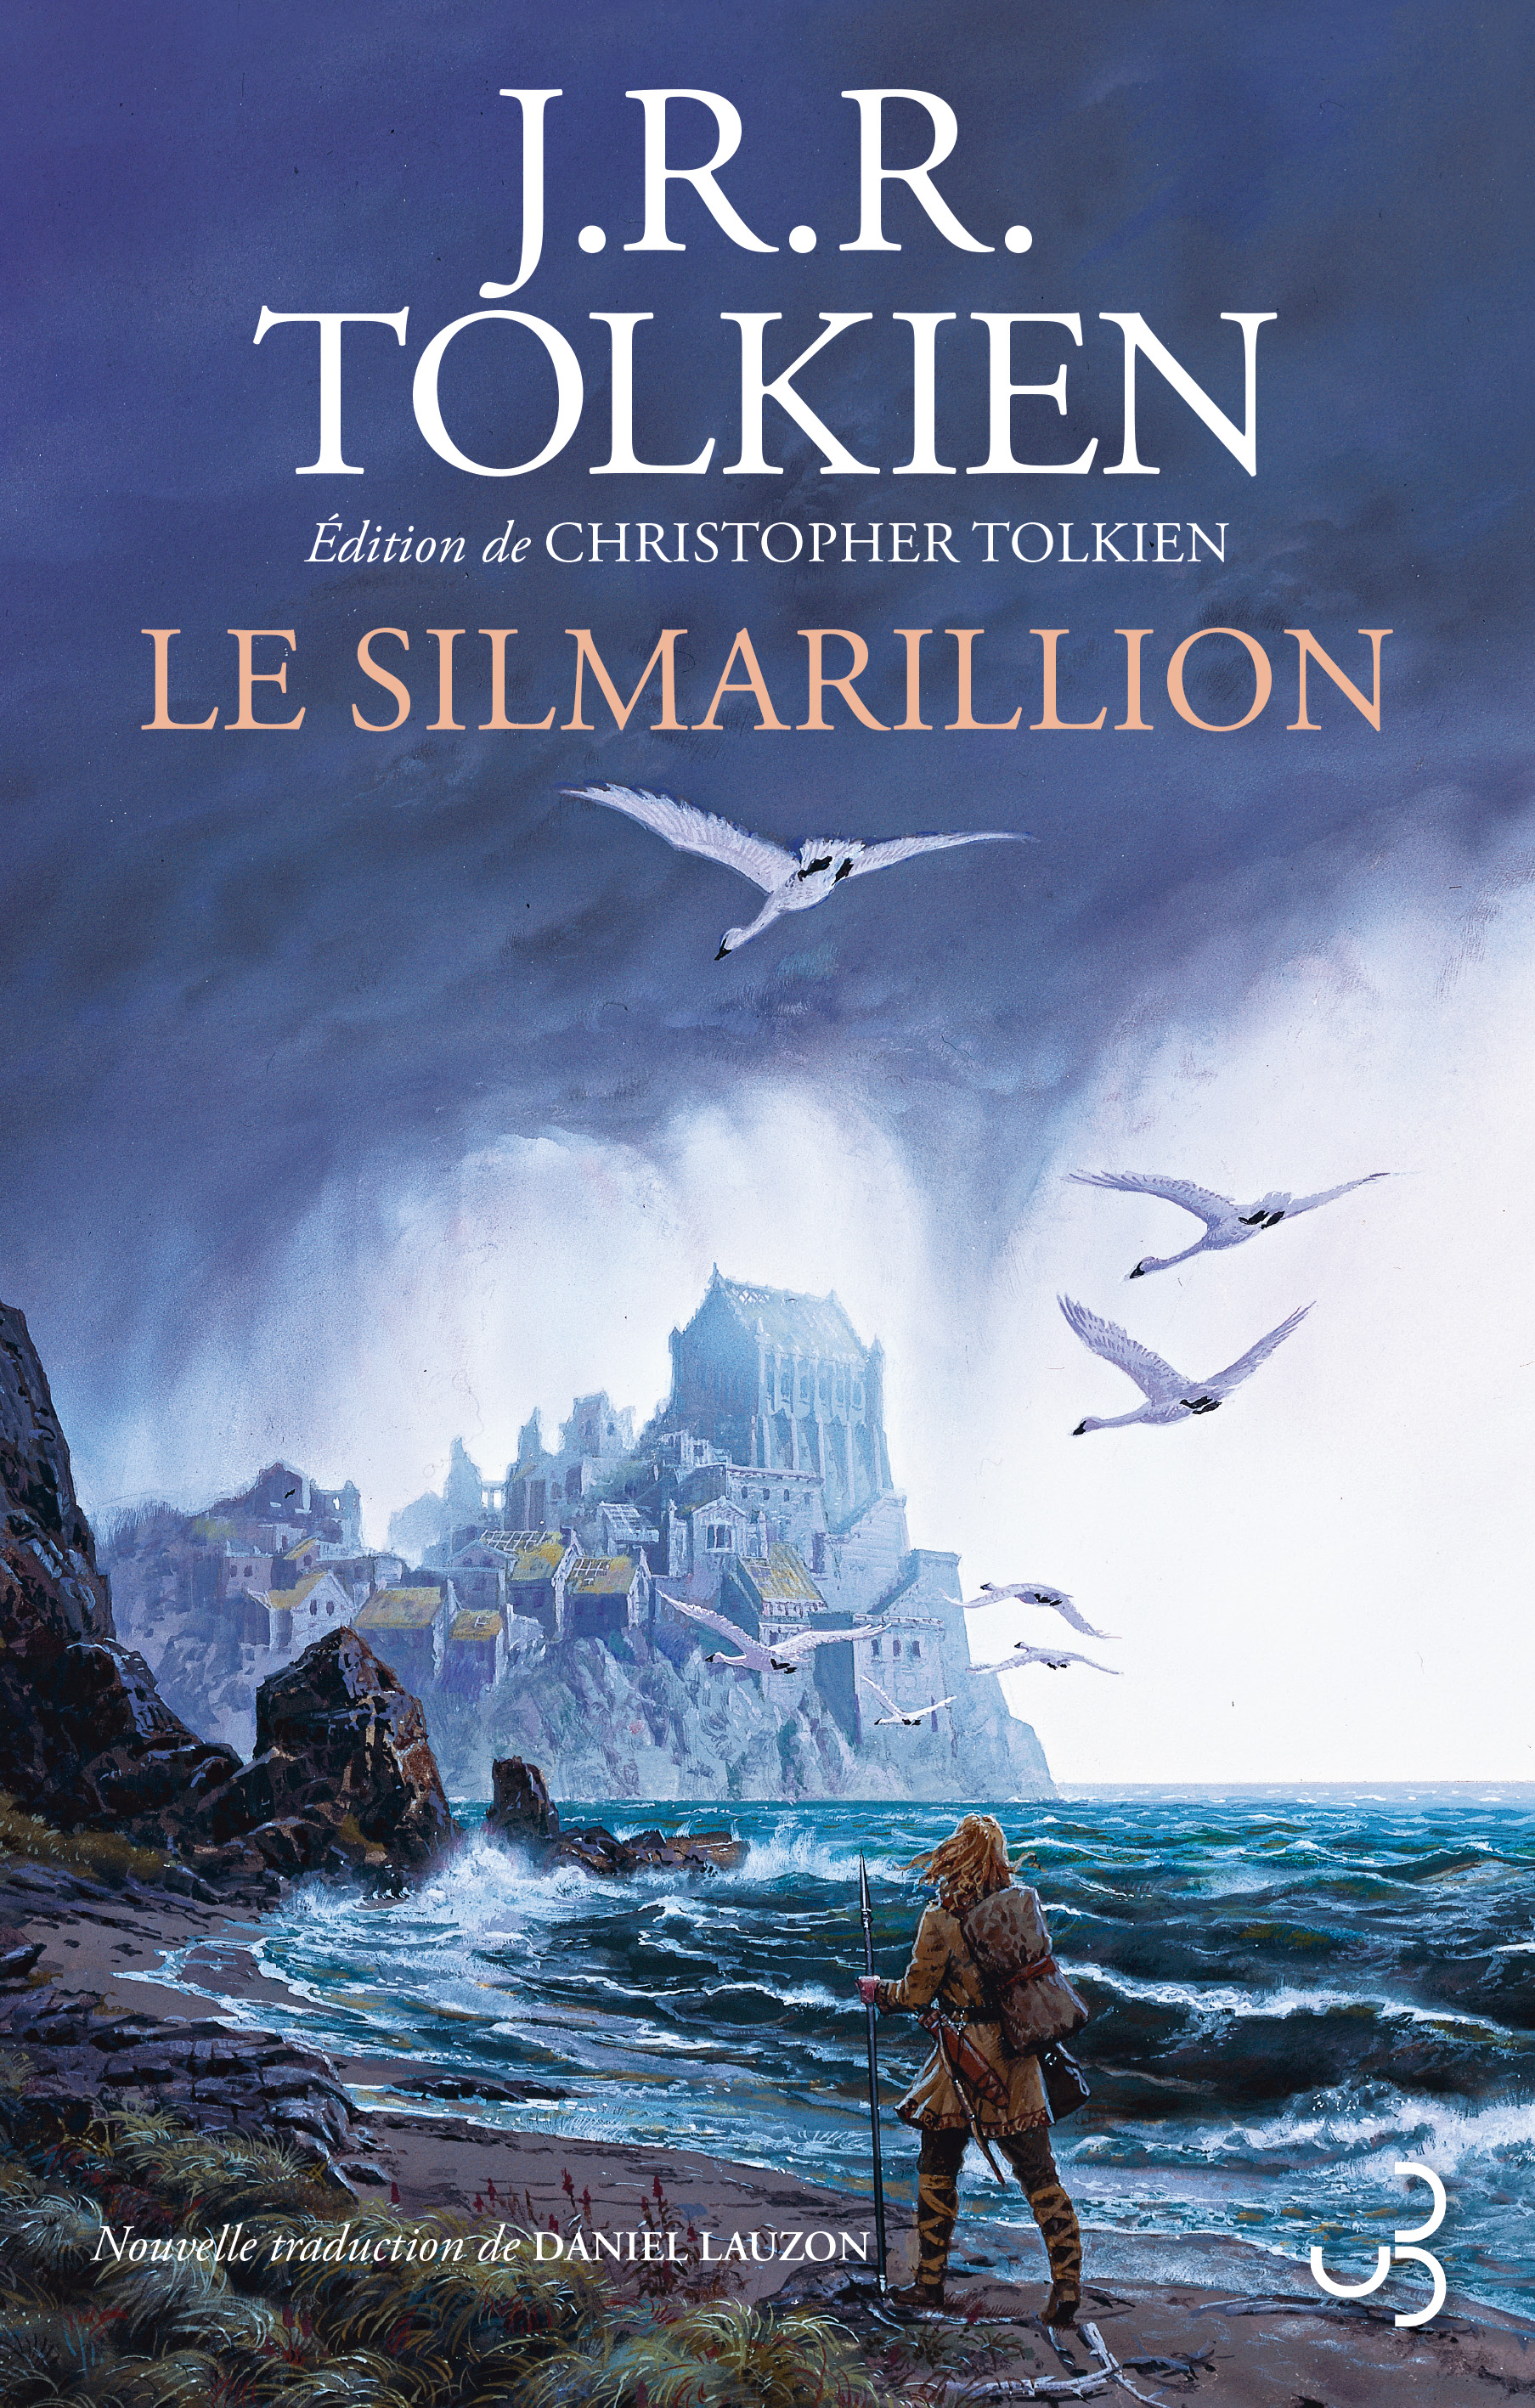 Afficher "Le Silmarillion"